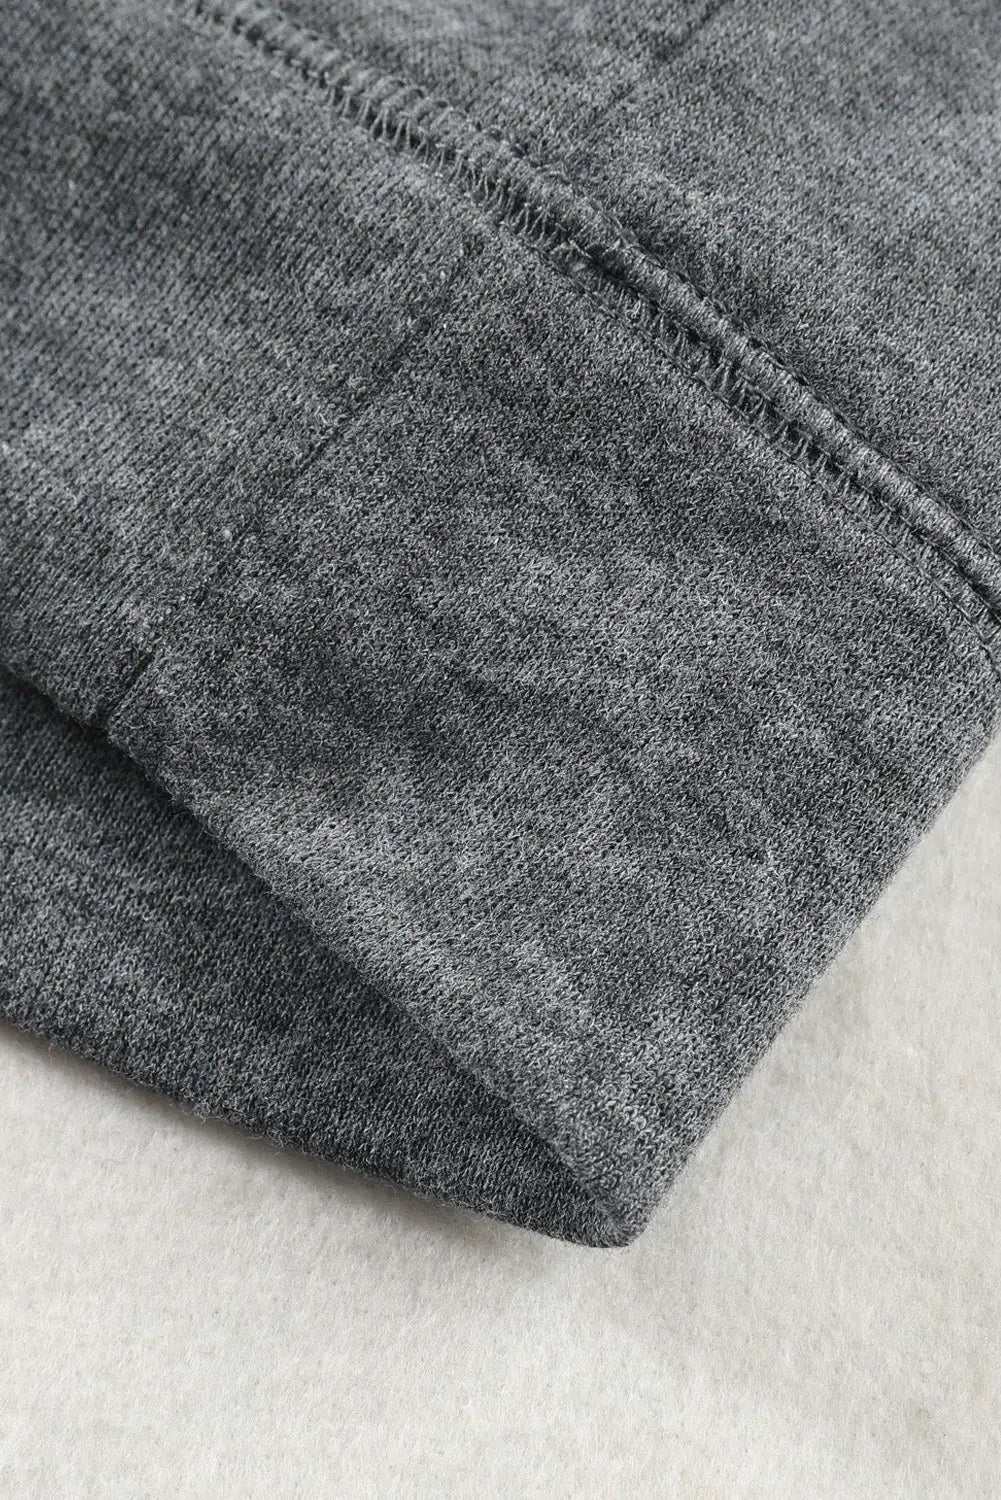 Mineral wash kangaroo pocket drawstring pullover hoodie - sweatshirts & hoodies